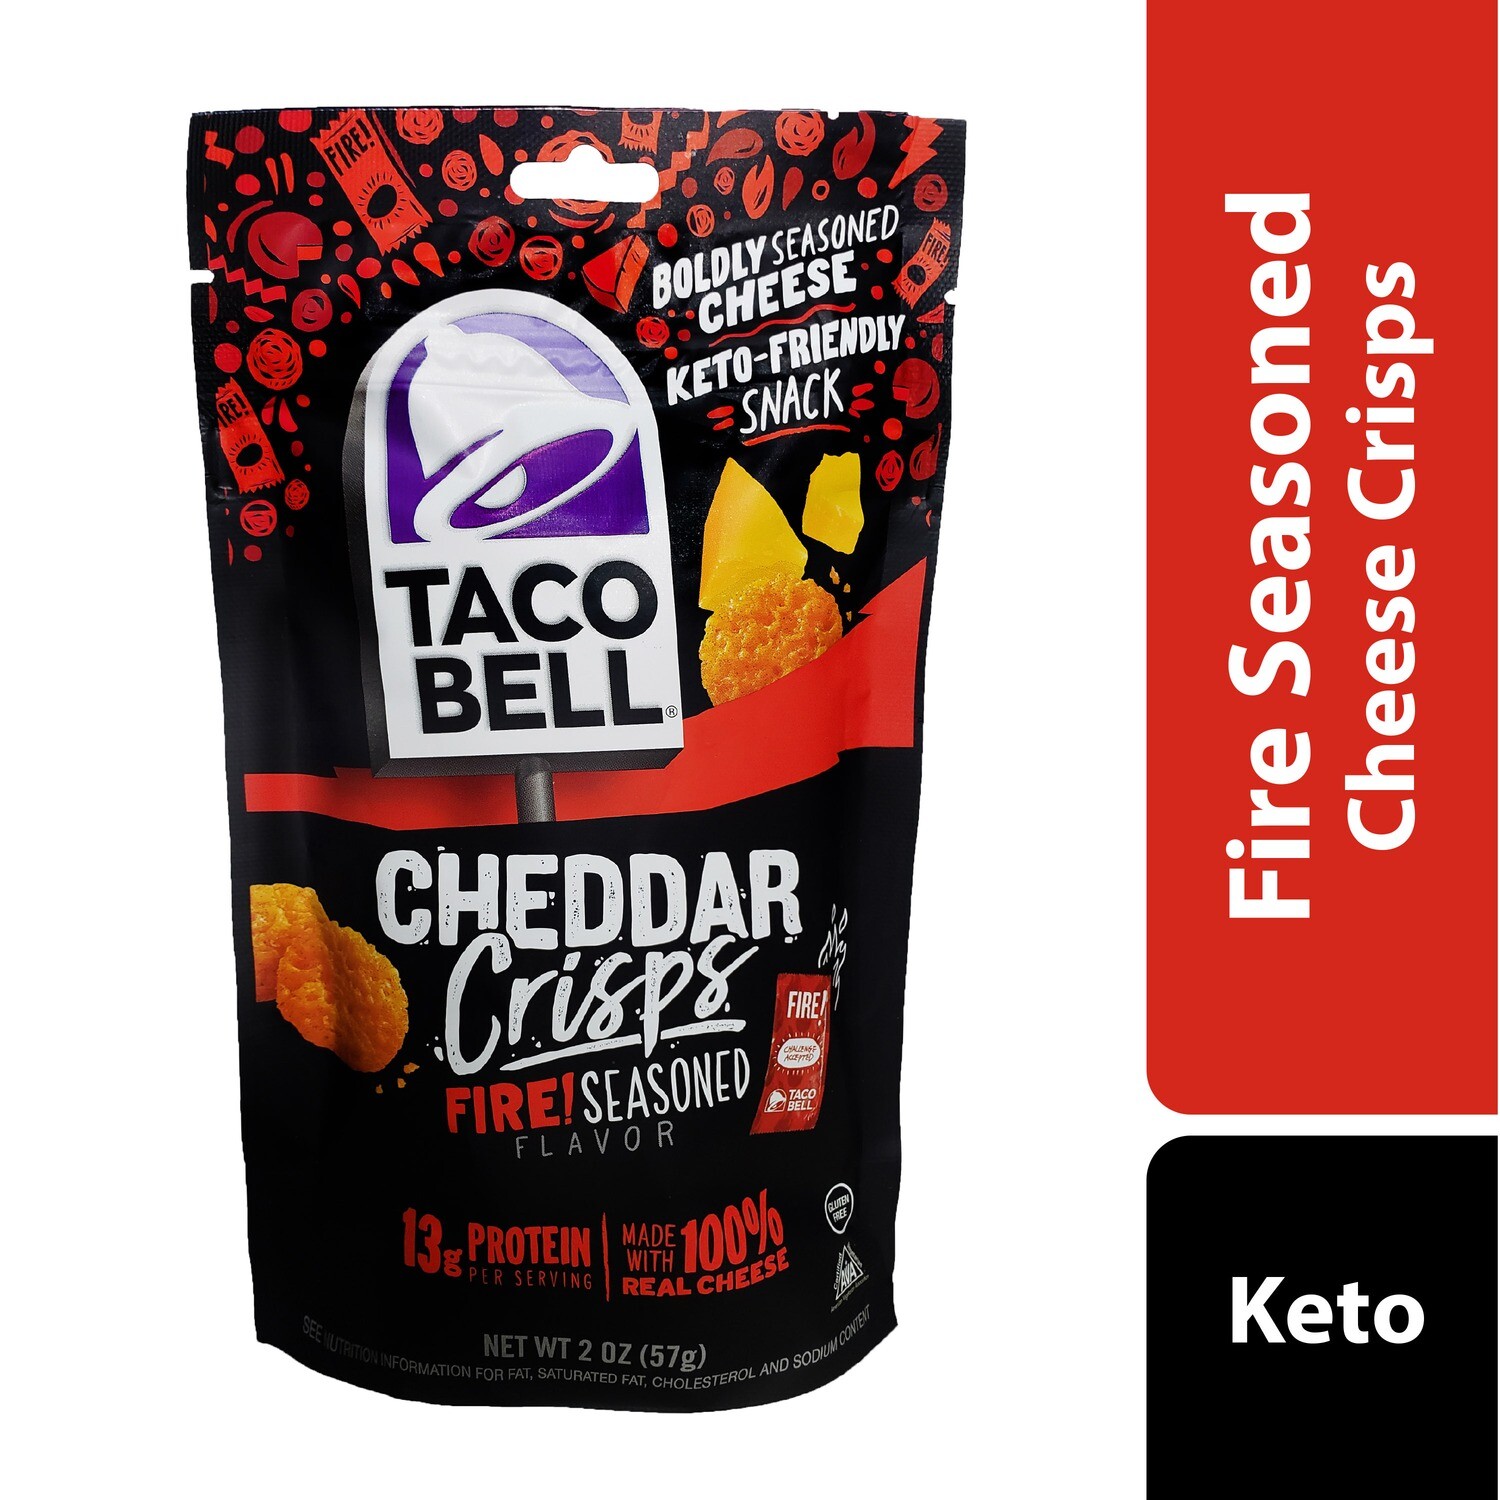 Taco Bell Cheddar Crisps Fire Seasoned 13g Protein